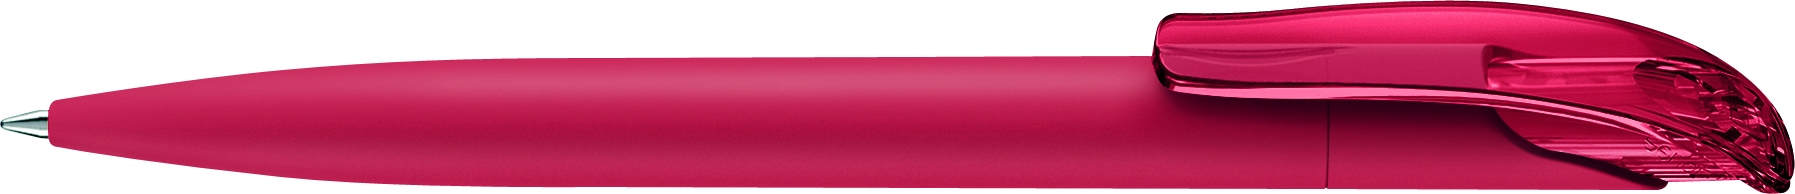  2737 ШР Challenger Soft Touch clip clear красный 201, красный, пластик